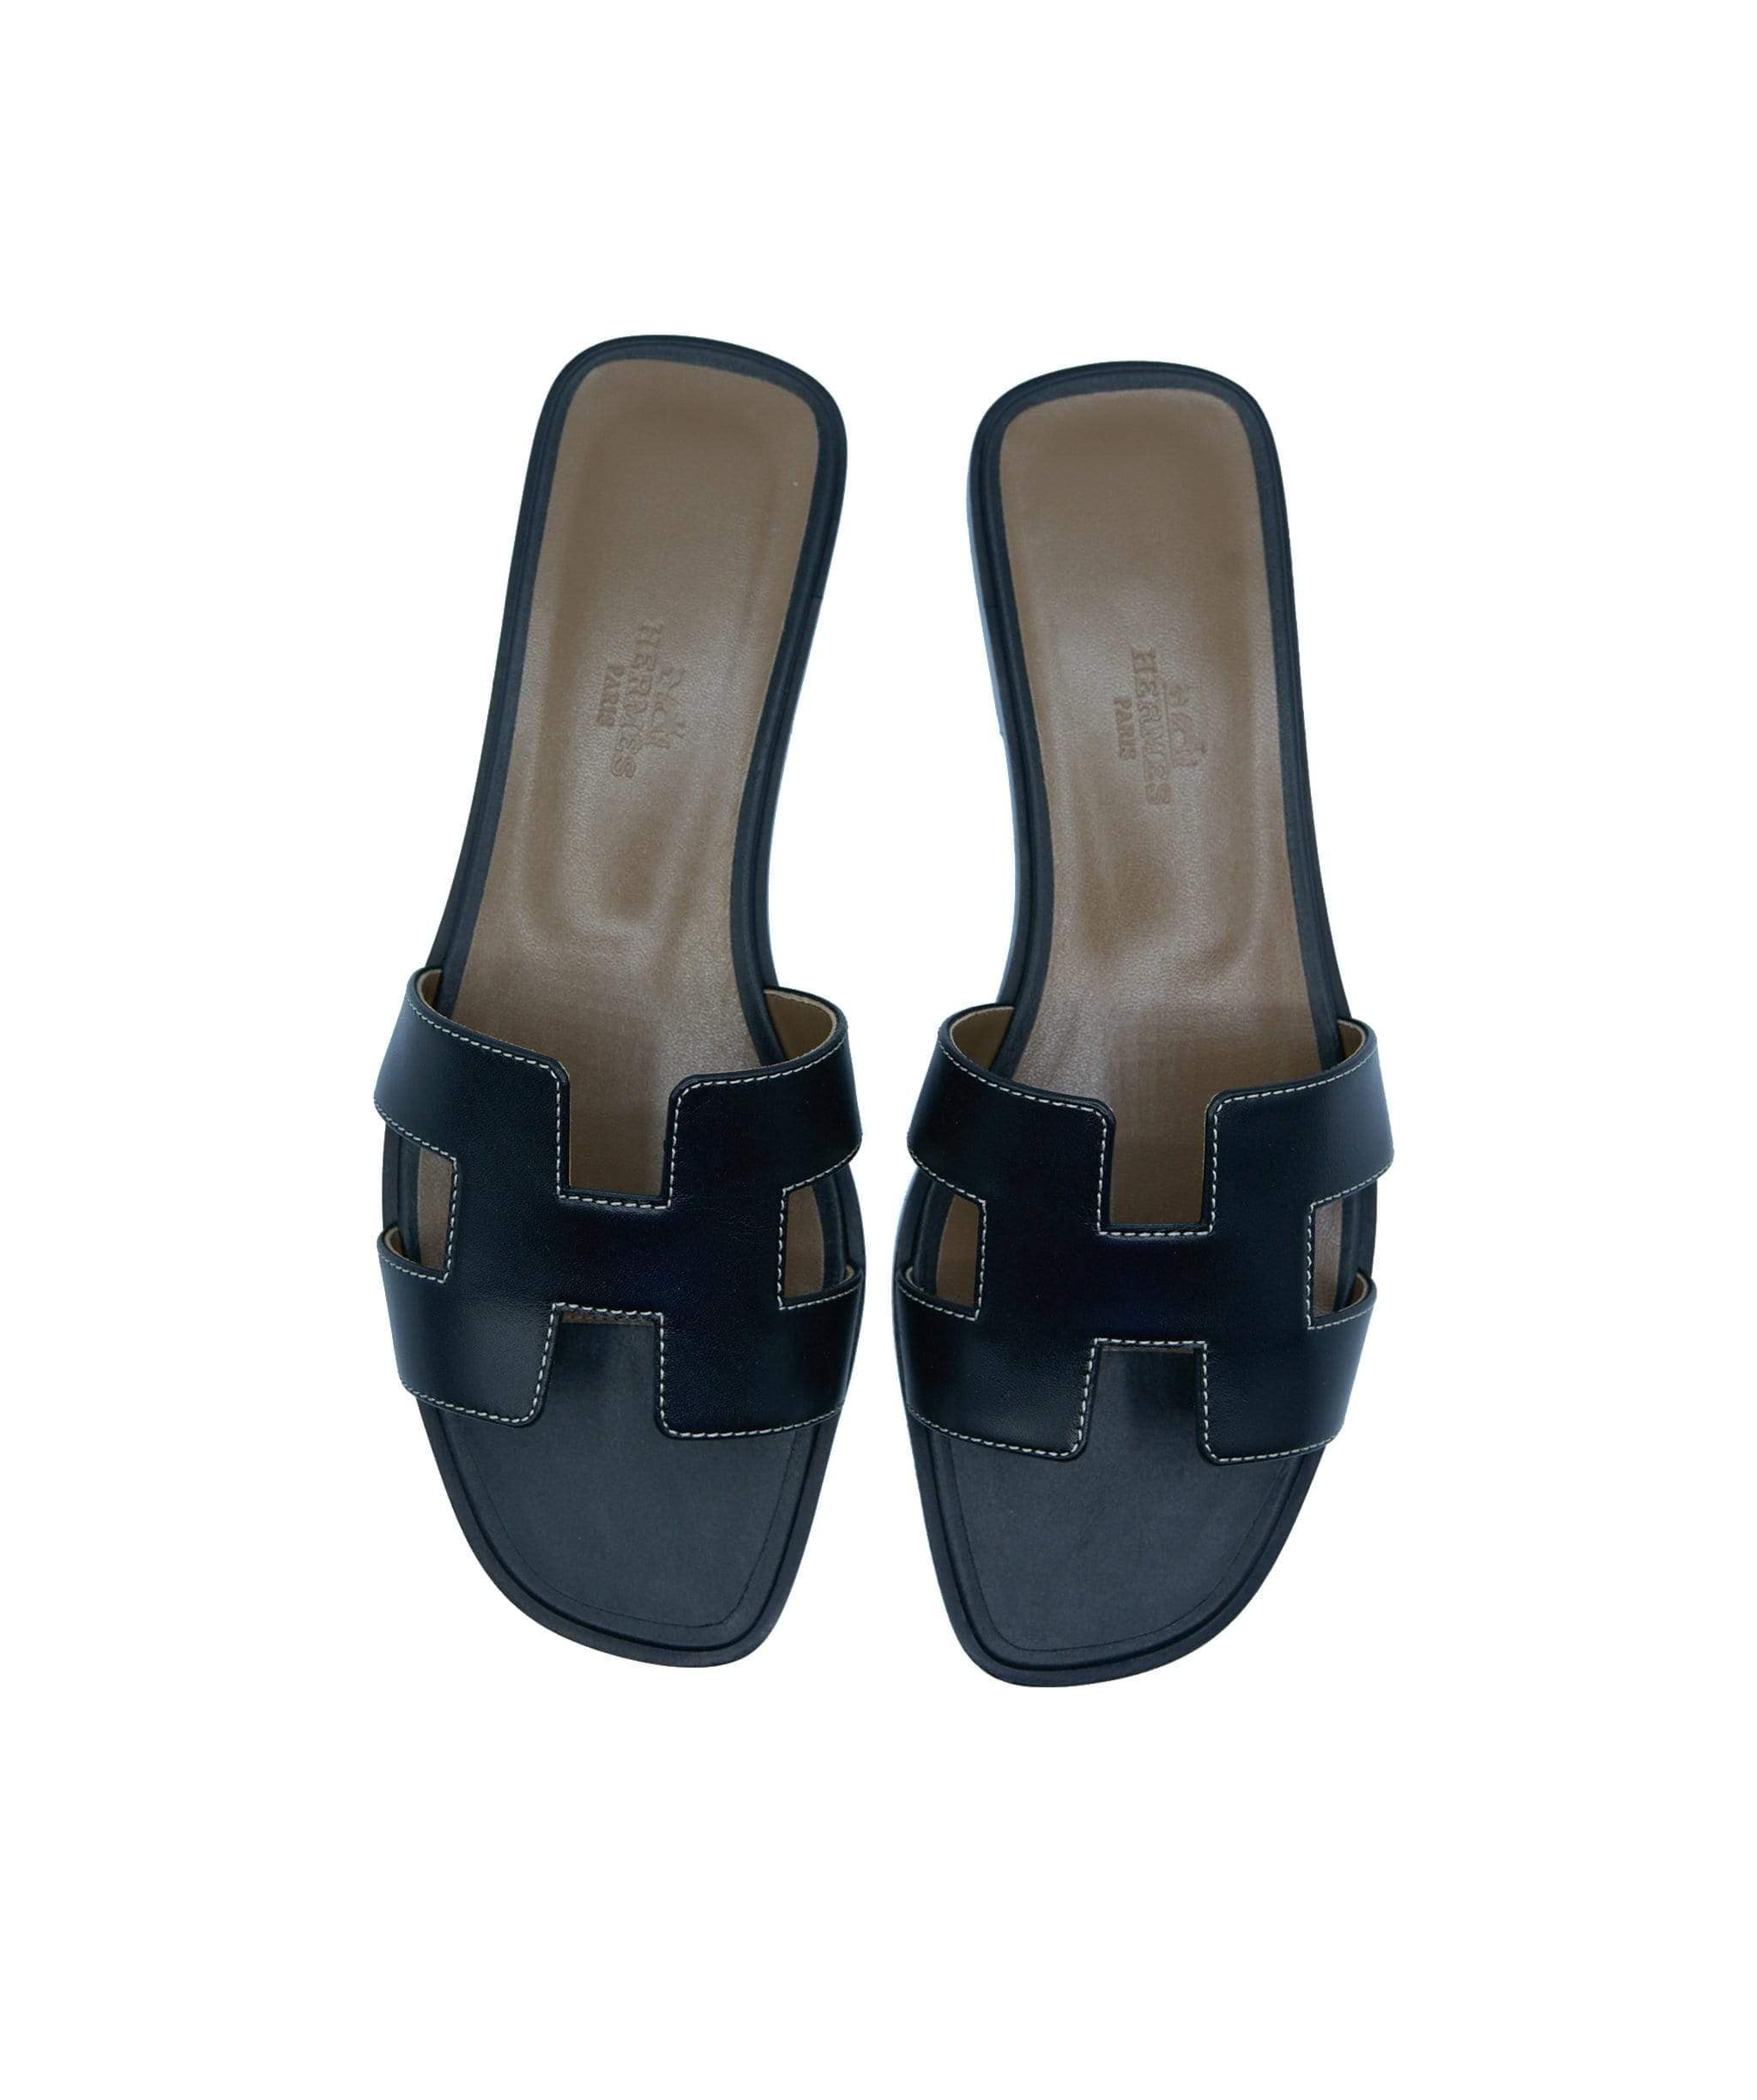 Hermès Oran Sandals in Black Sellier Size 38 - ASL1420